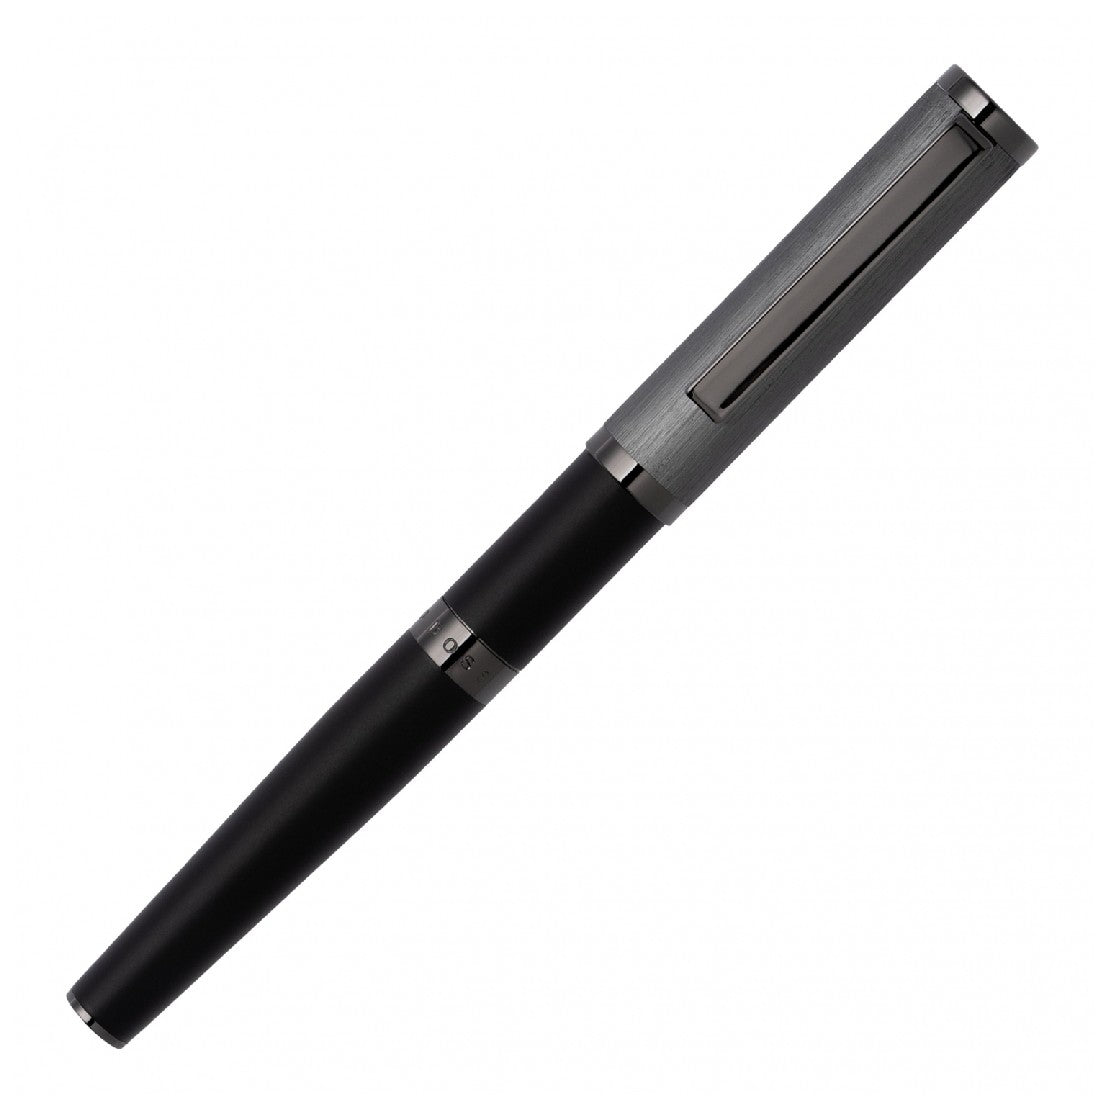 قلم باللون الرمادي داكن وأسود من هوغو بوس - HBPEN-0020